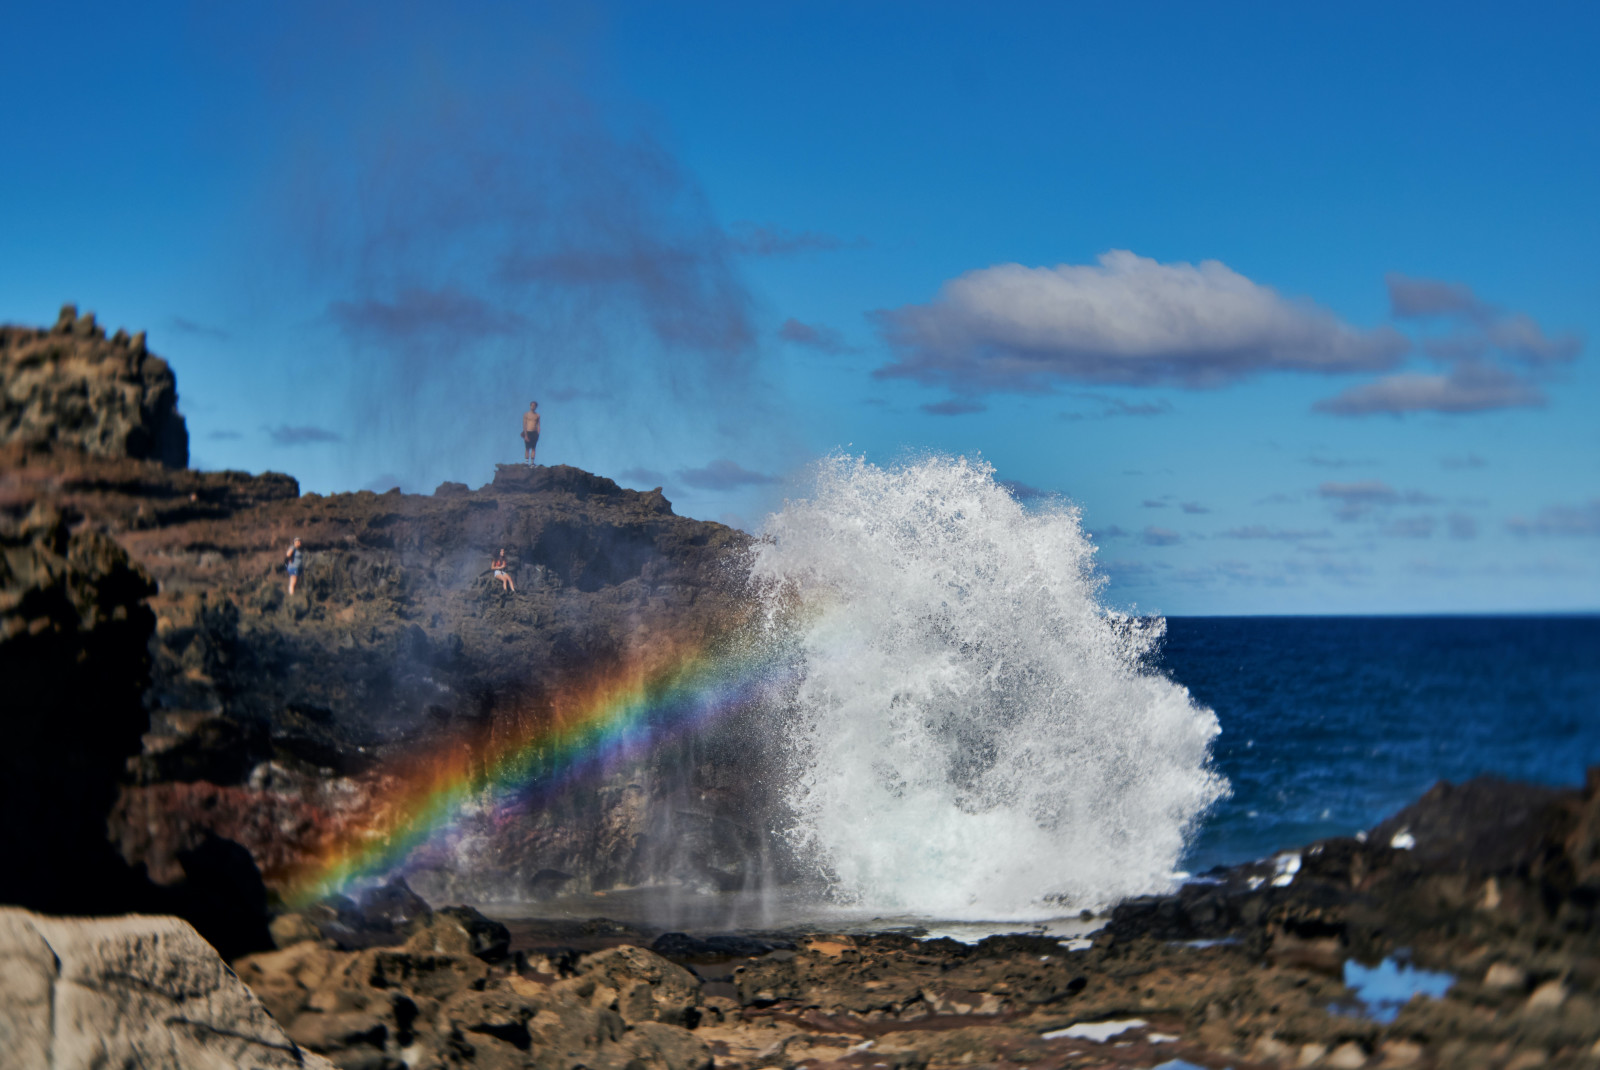 crashing waves next to rocky coastline with rainbow during daytime